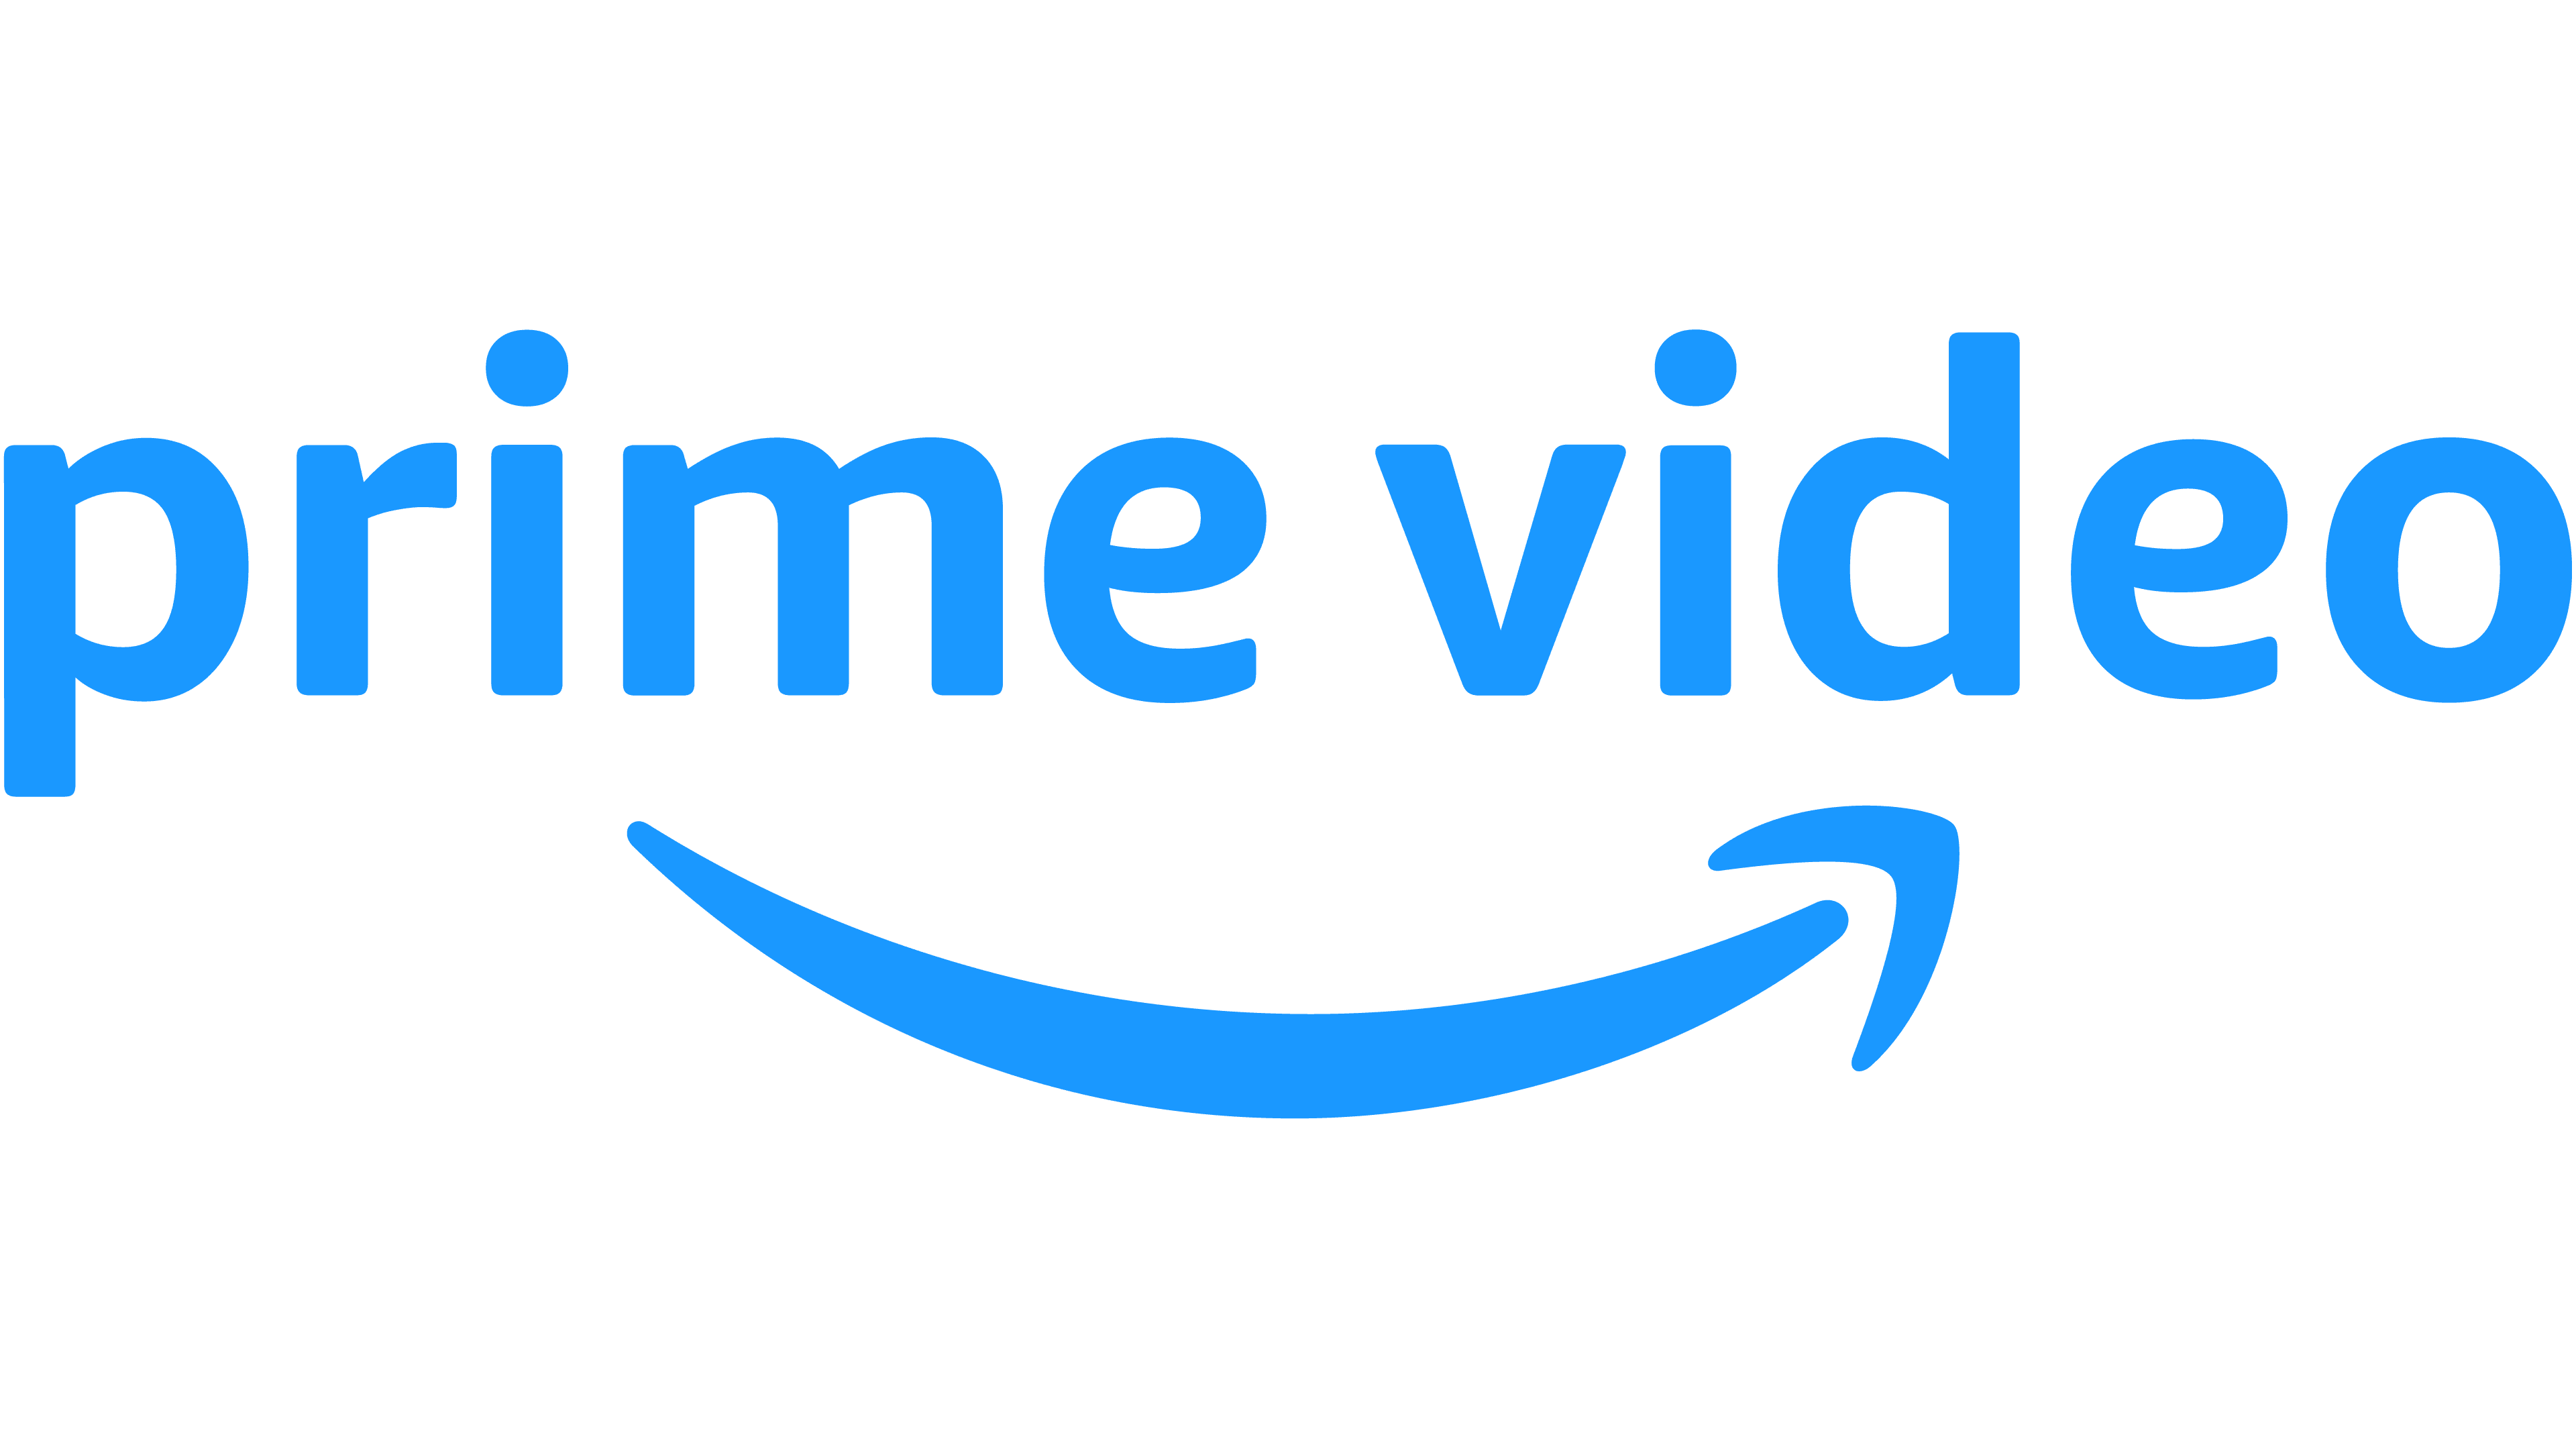 Amazon-Prime-Video-Logo